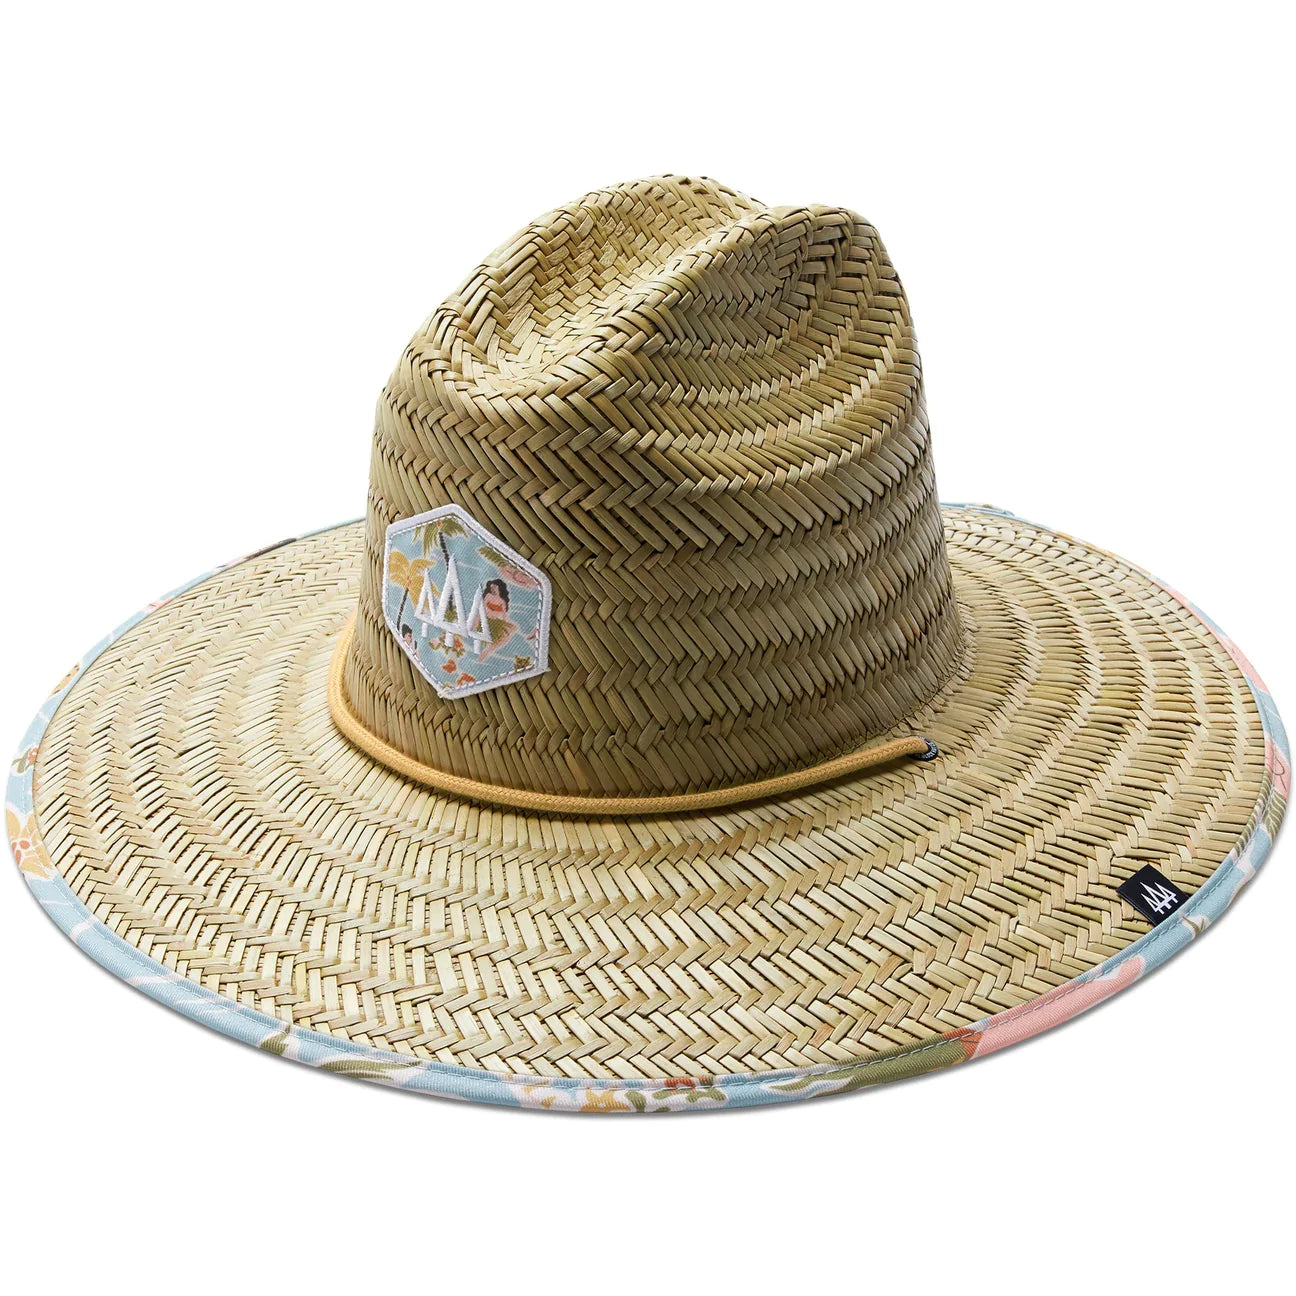 The Islander Straw Hat